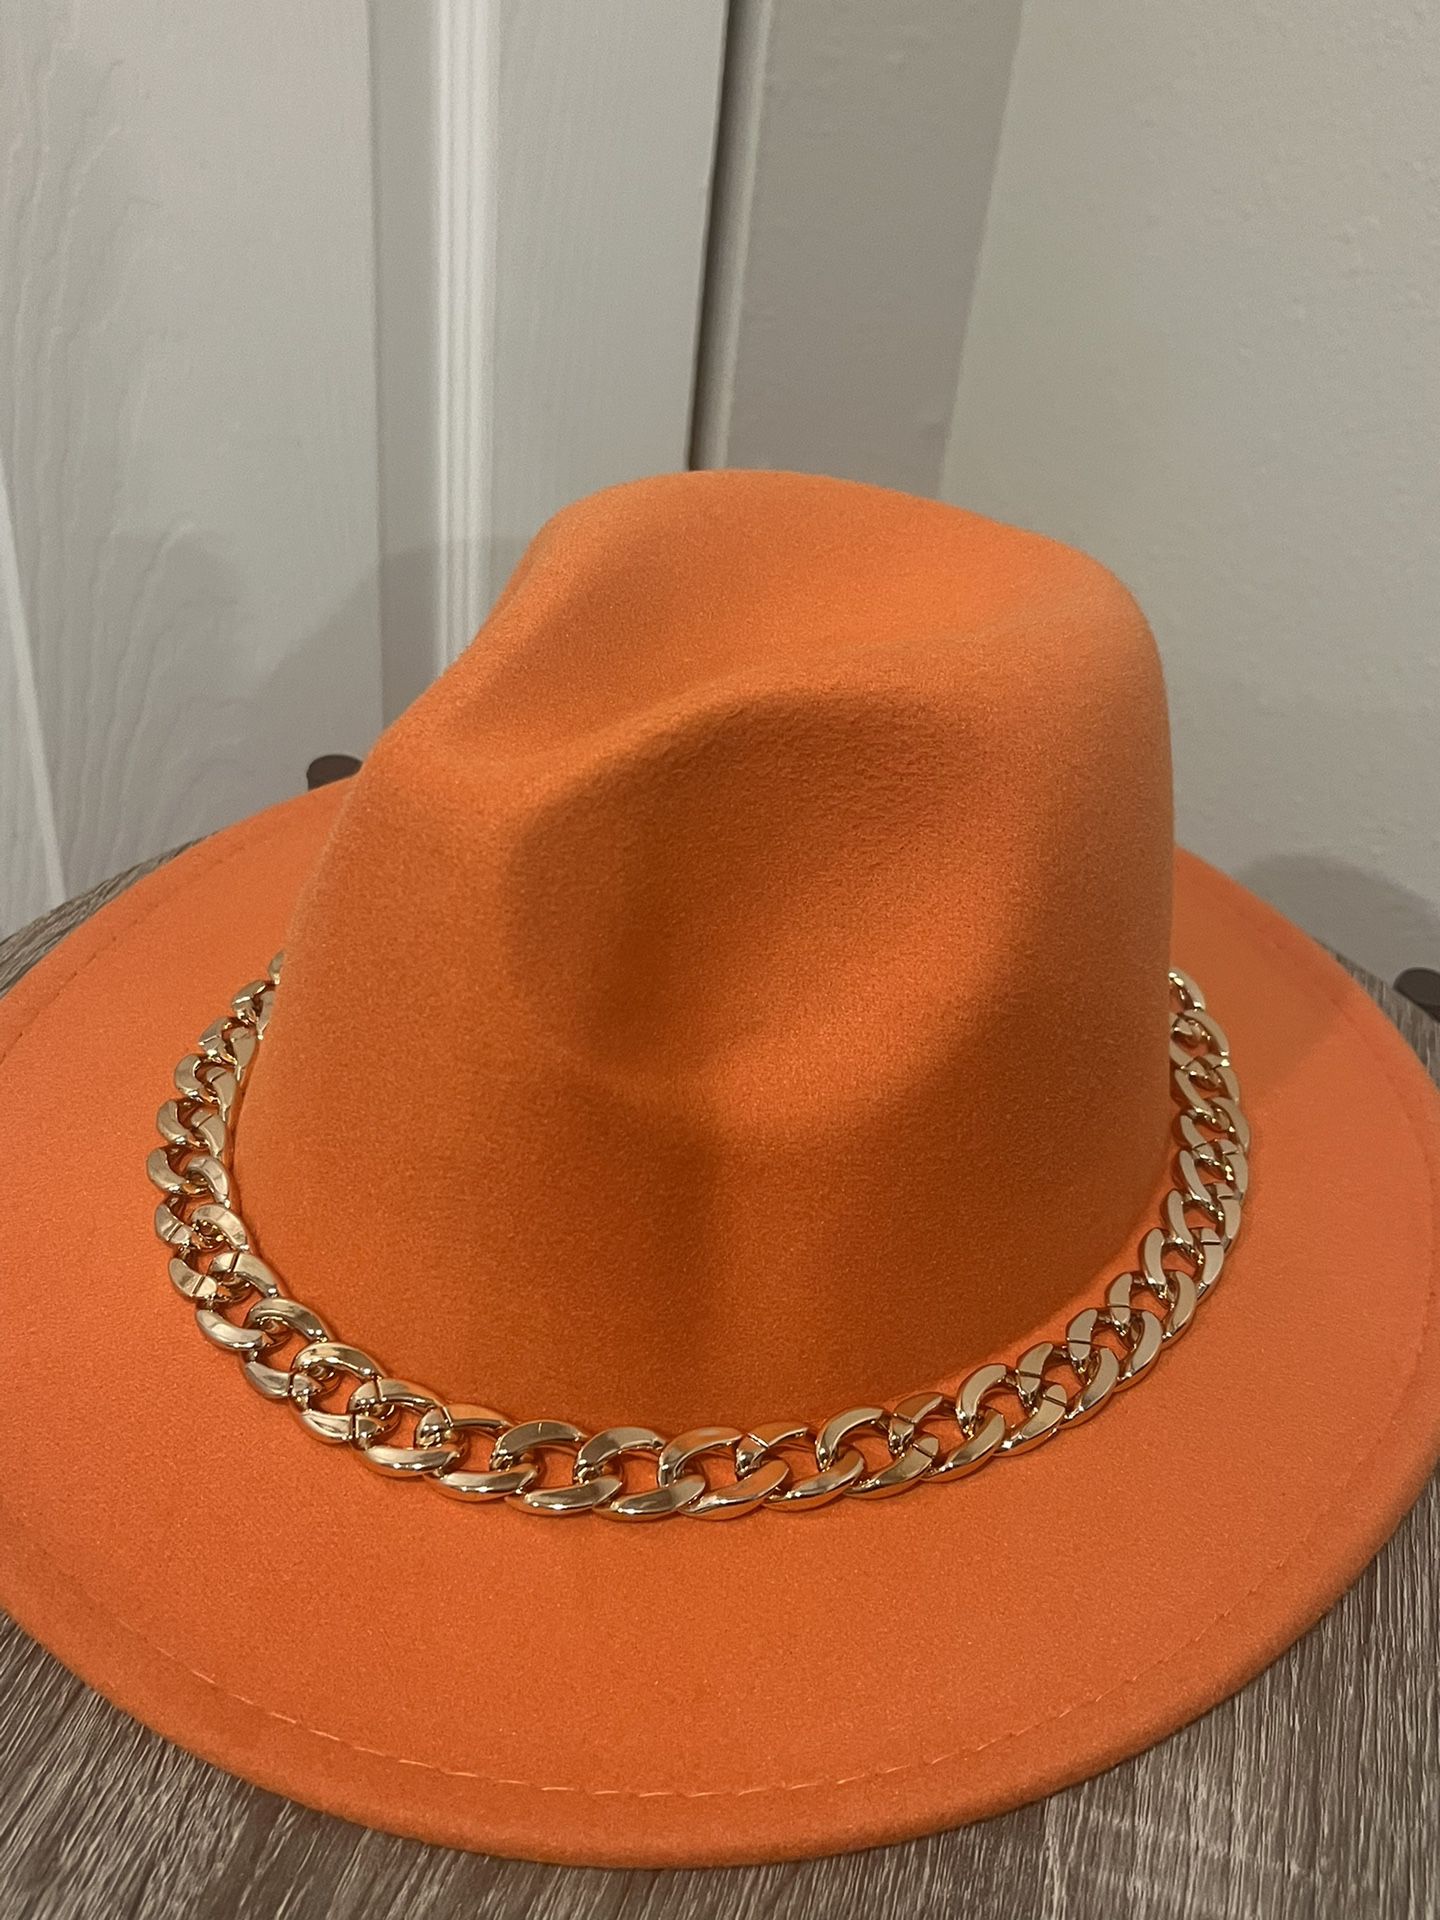 A Orange cowboy Hat